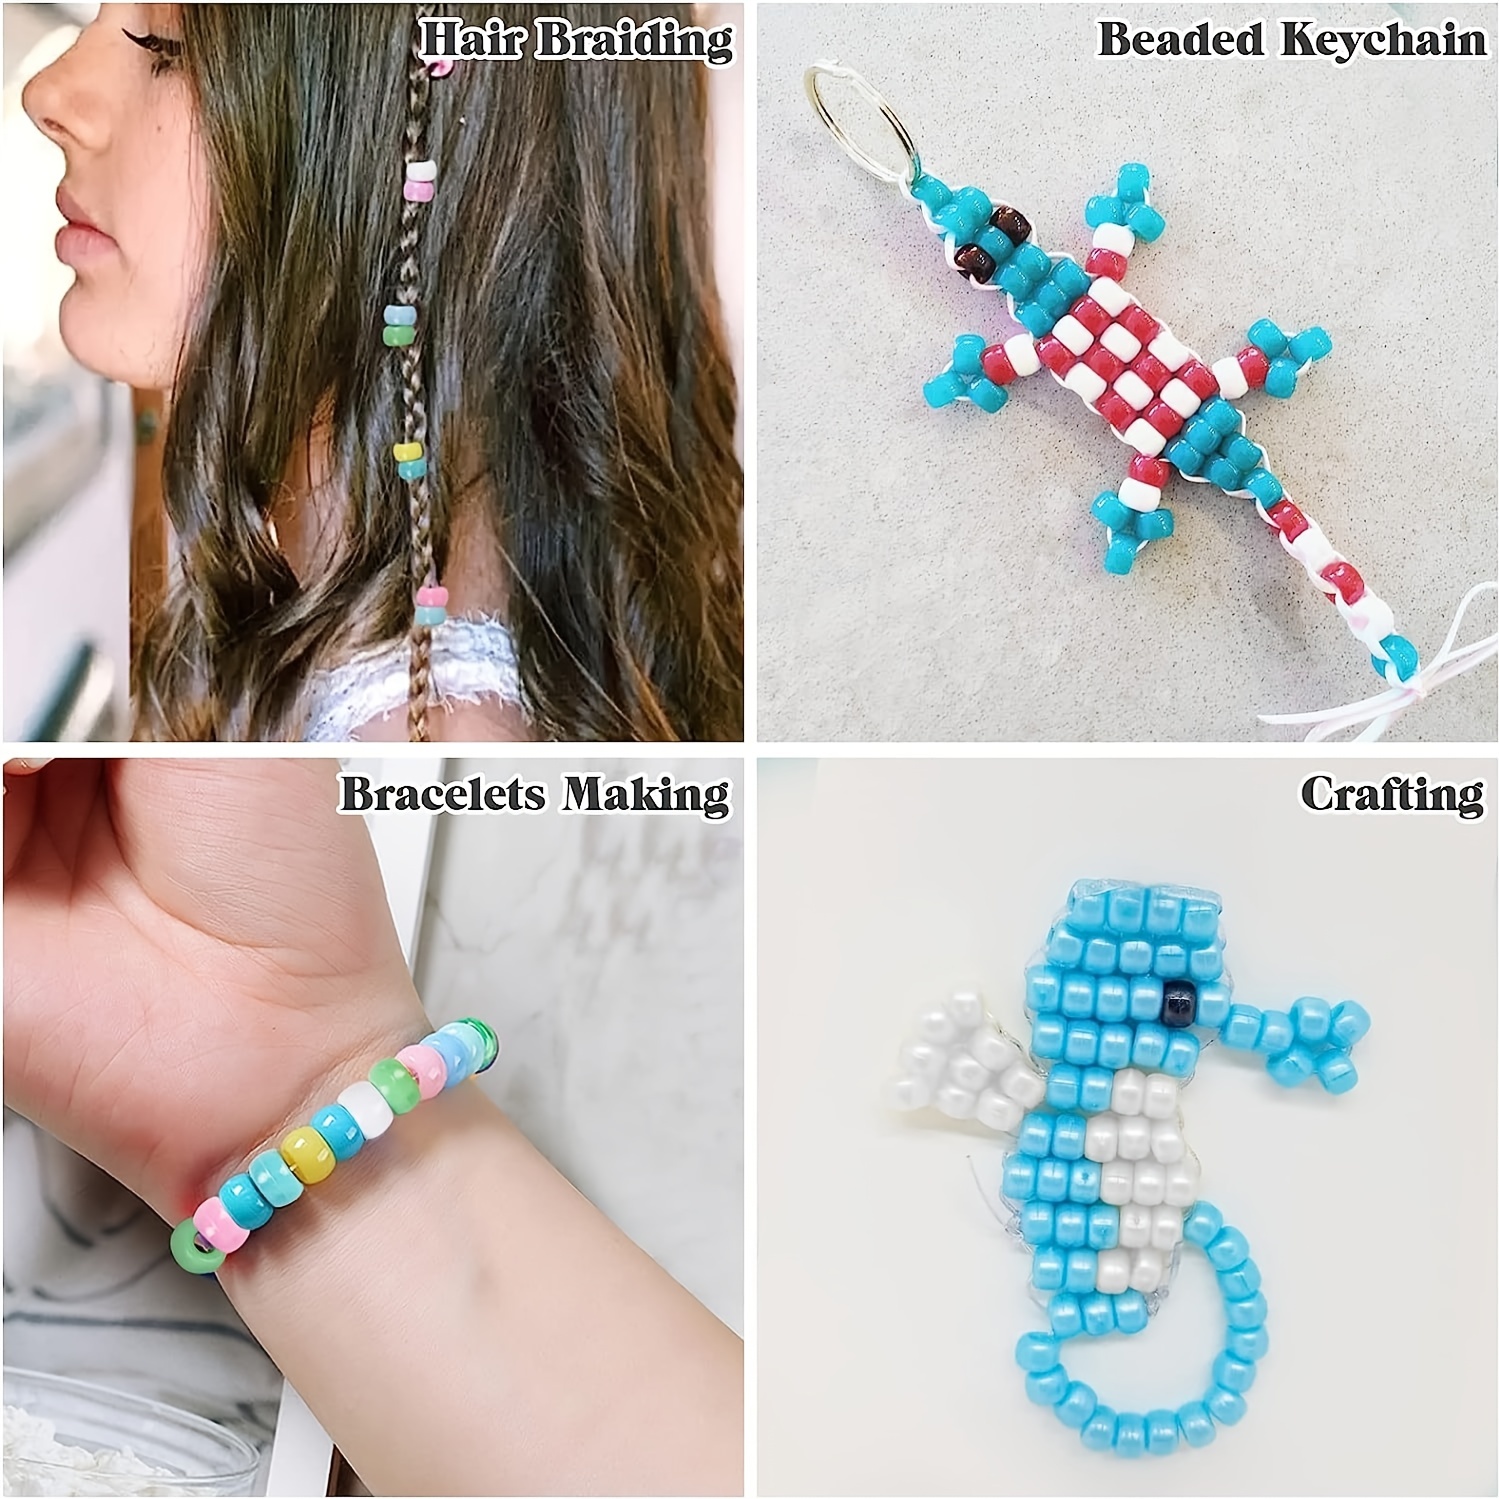  Pony Beads 1200 Multicolor Craft Beads Bulk Bracelets Beads  Rainbow Hair Braids Plastic Beads